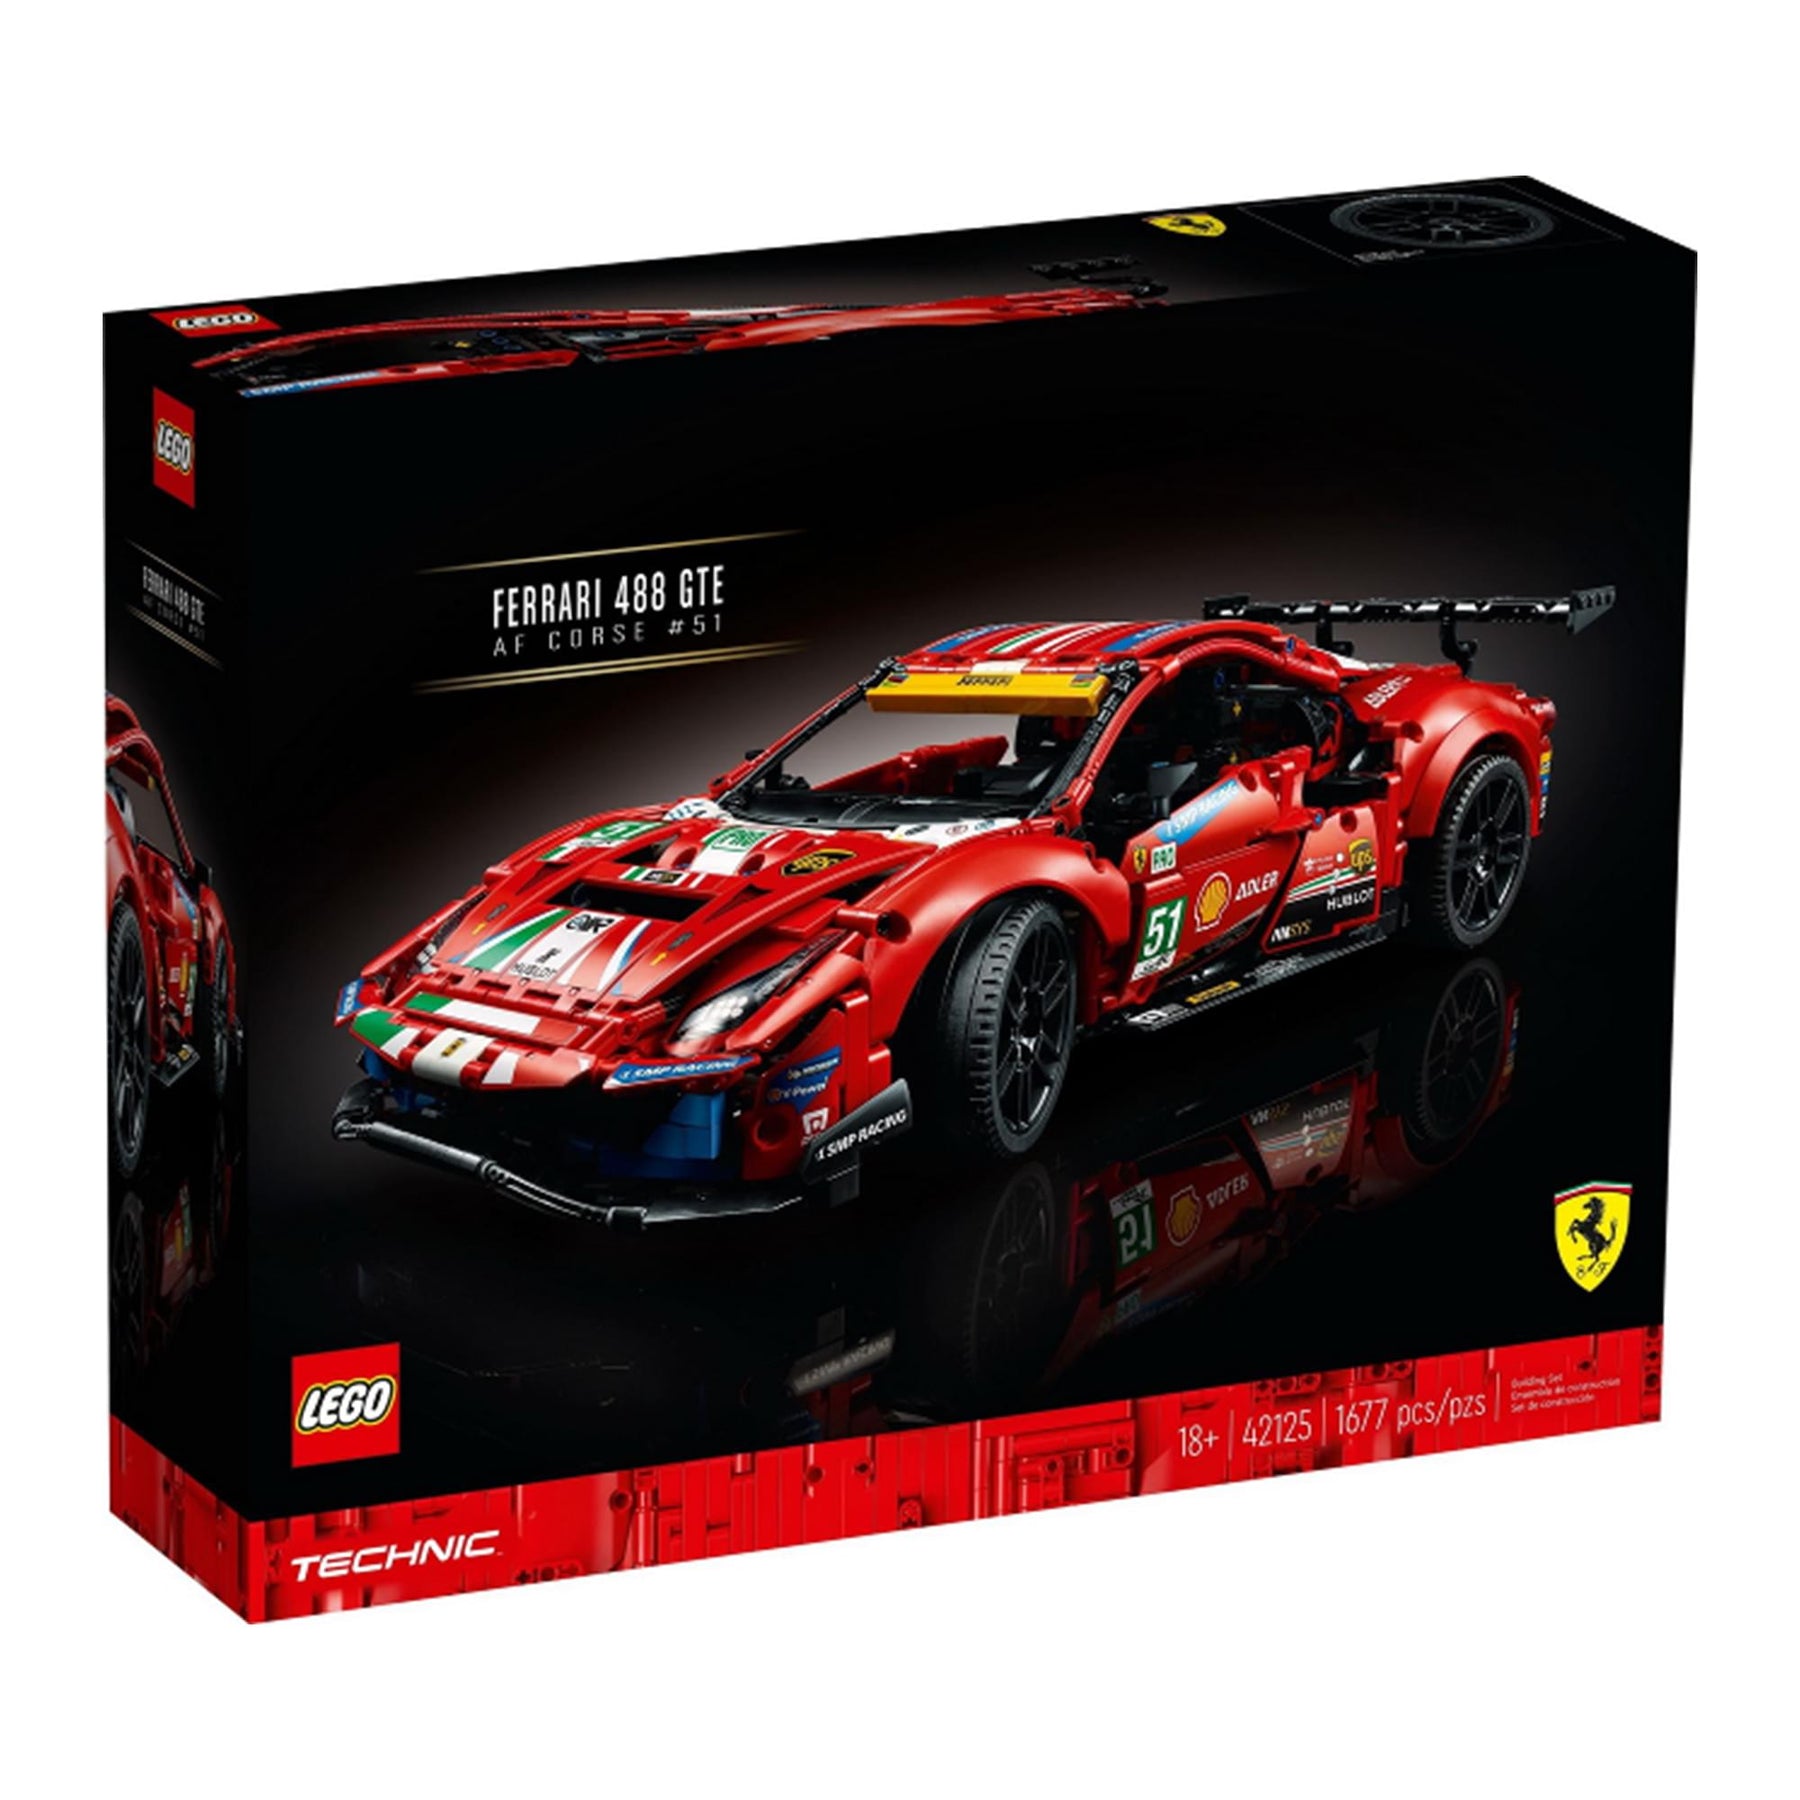 LEGO Technic 42125 Ferrari 488 GTE AF Corse #51